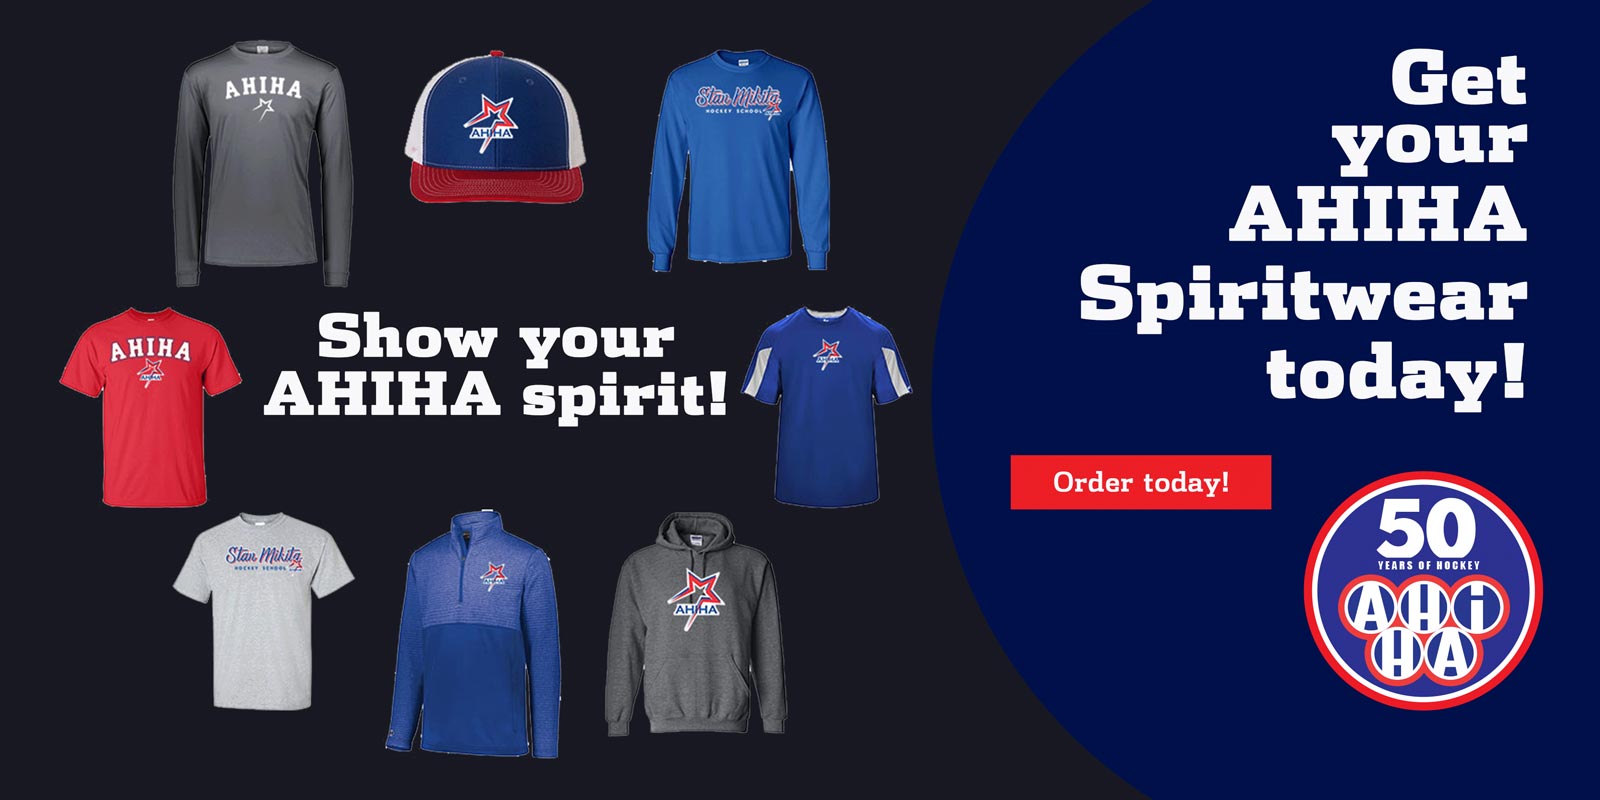 Get your AHIHA Spiritwear today!